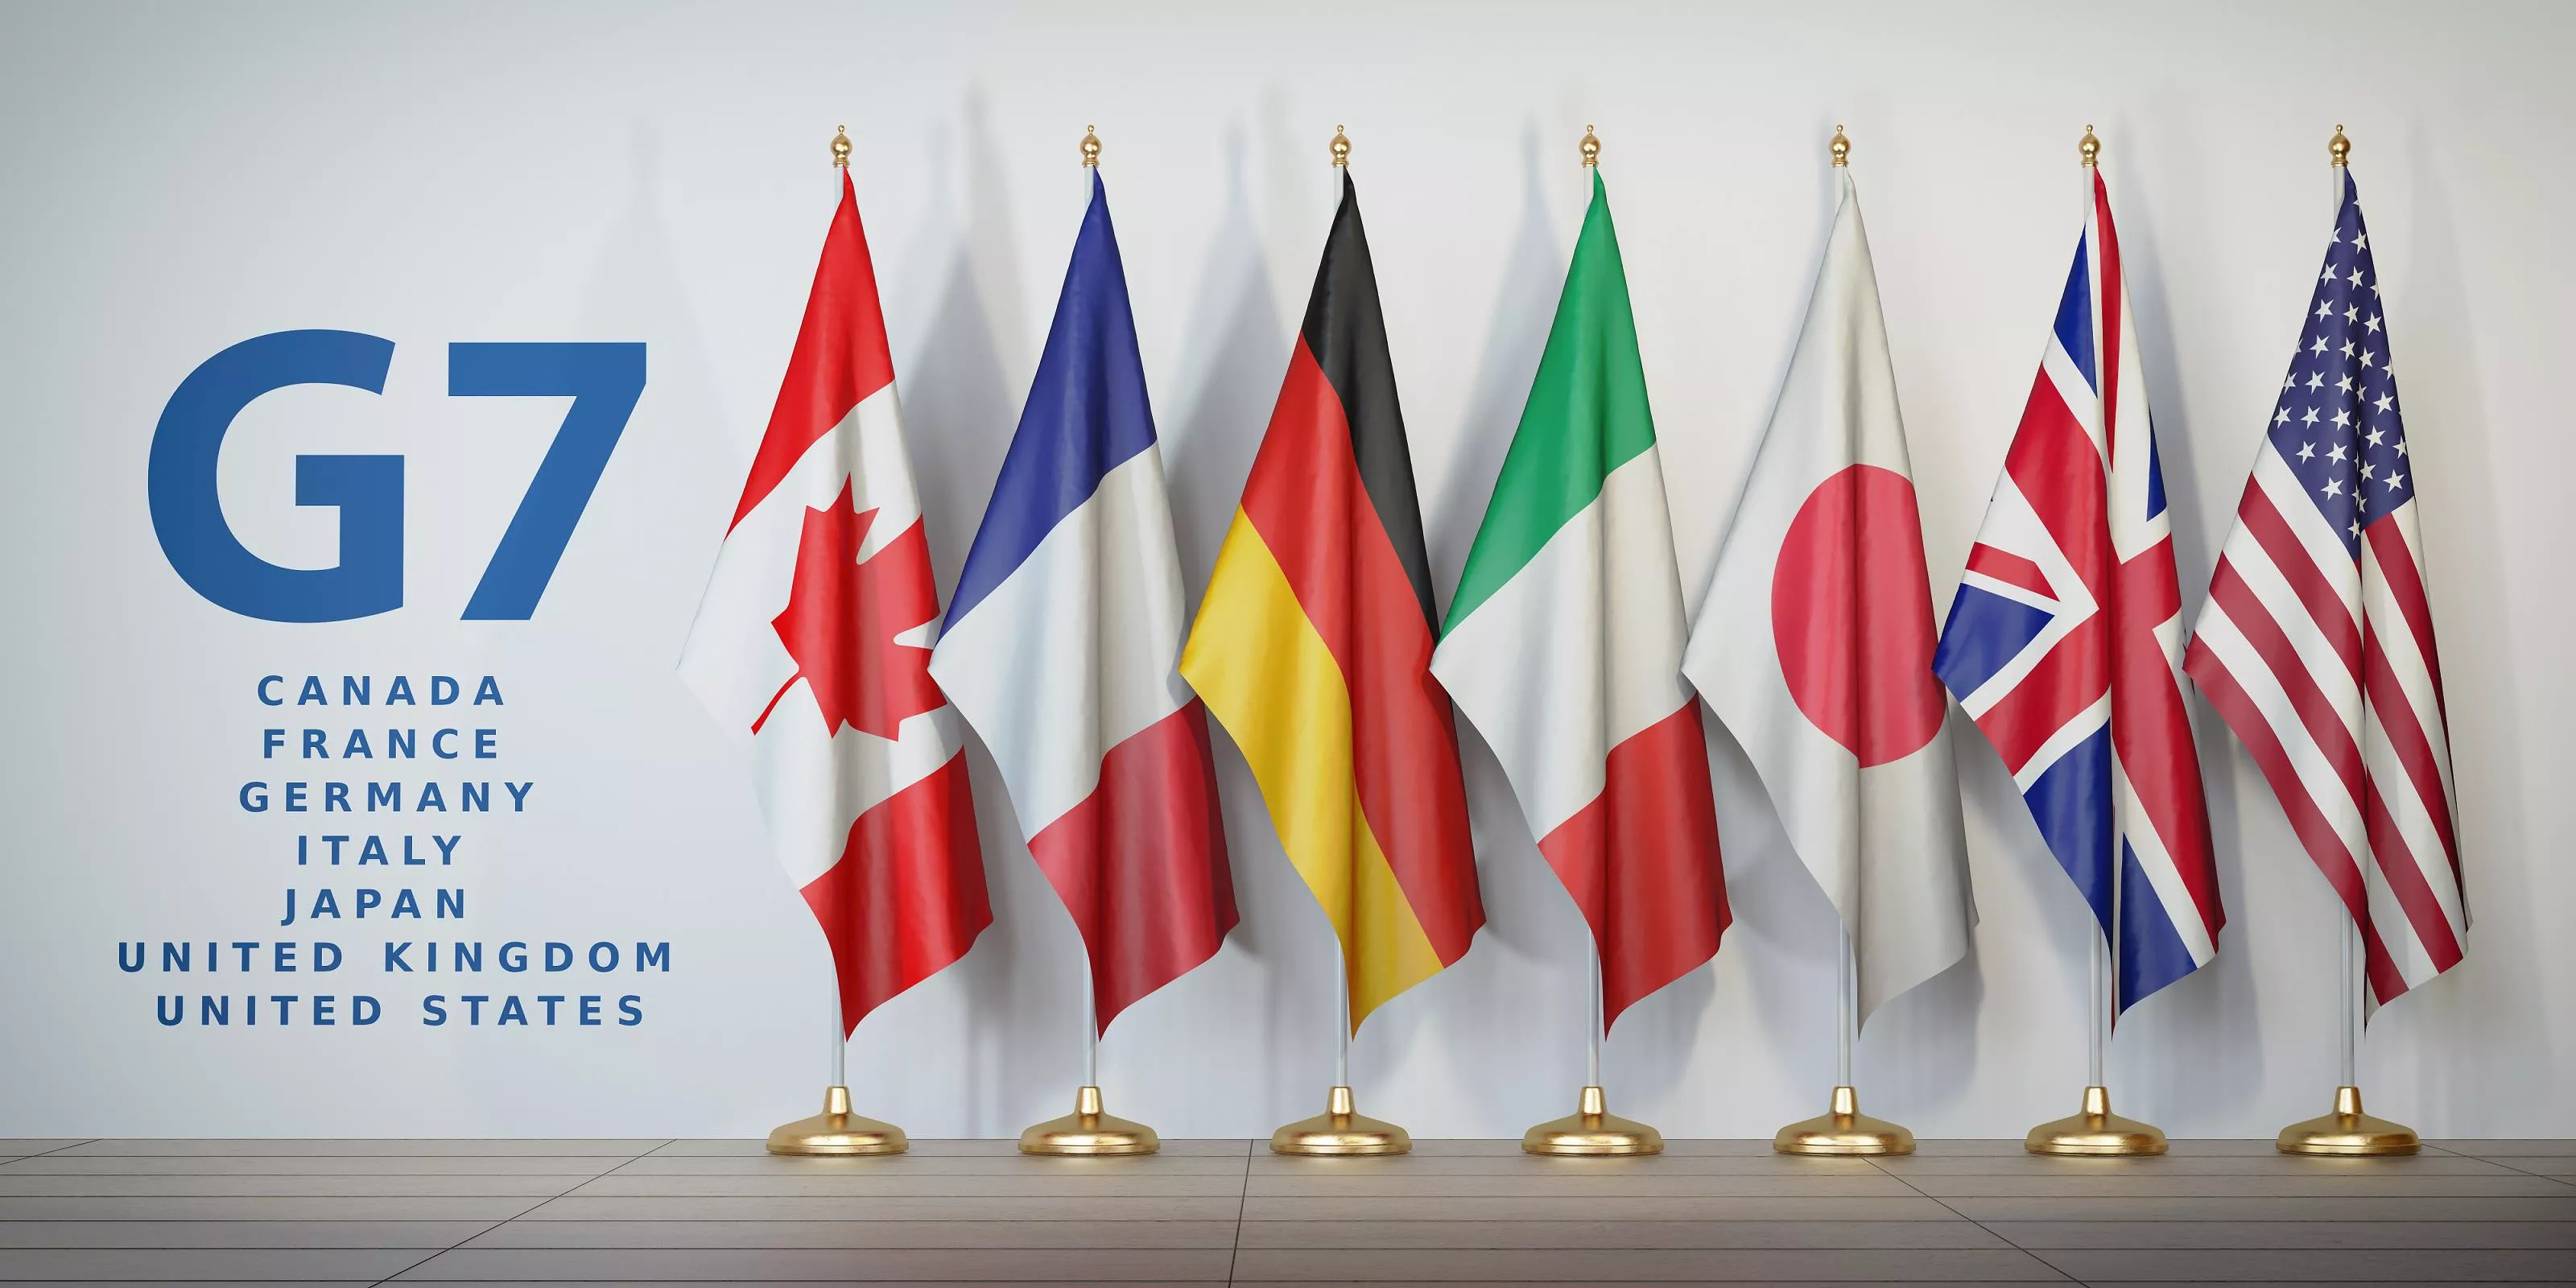 G7 Summit Flags